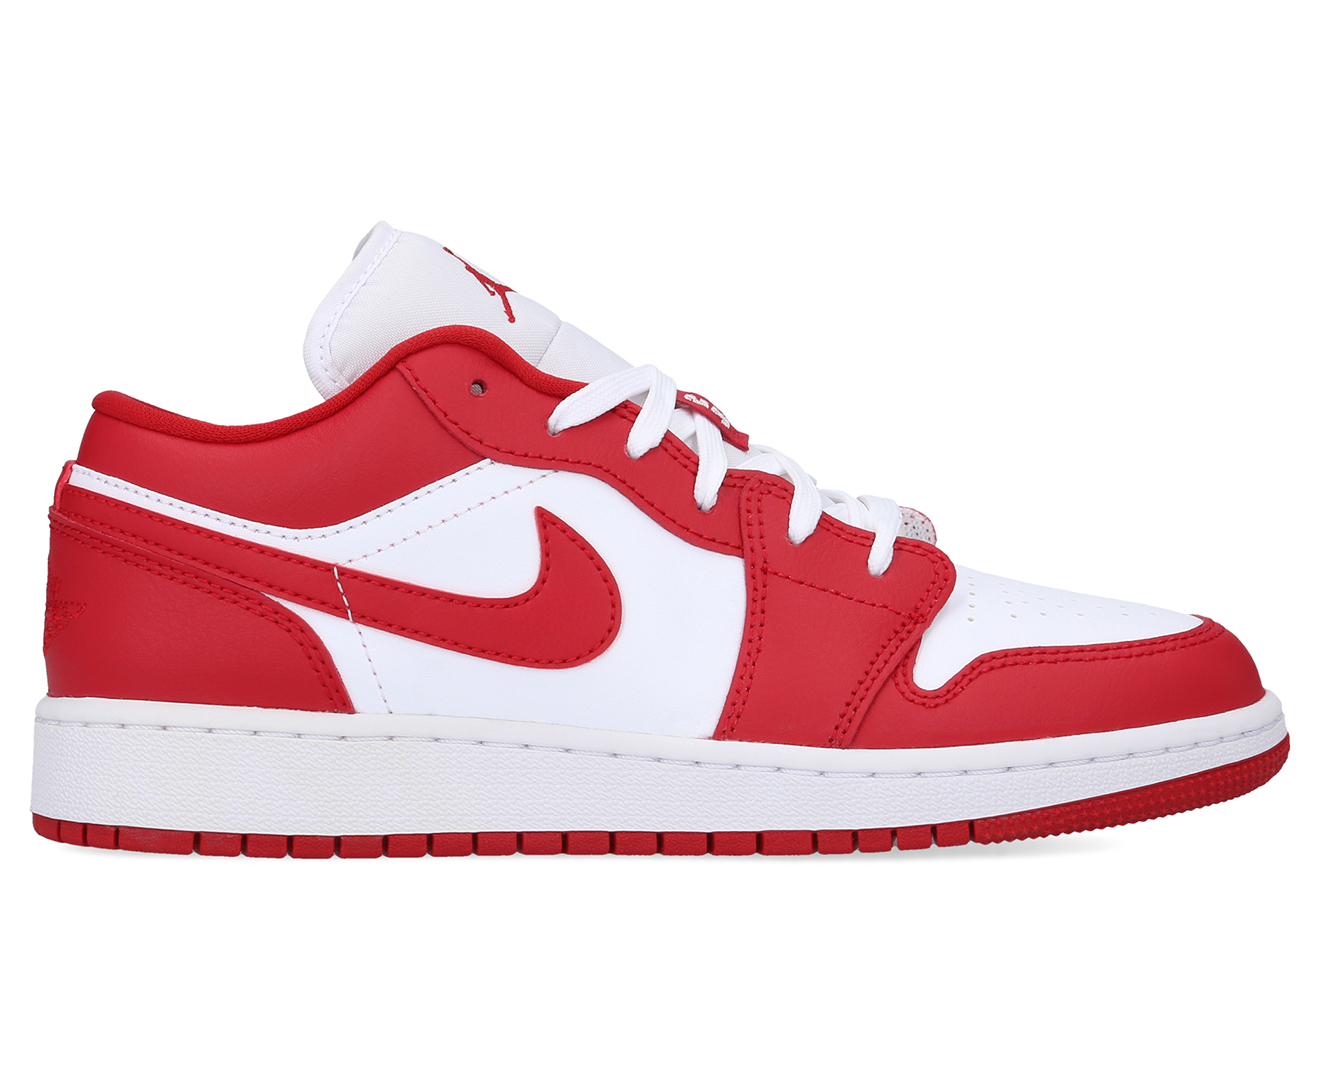 Nike Grade-School Boys' Air Jordan 1 Low Sneakers - Gym Red/White ...